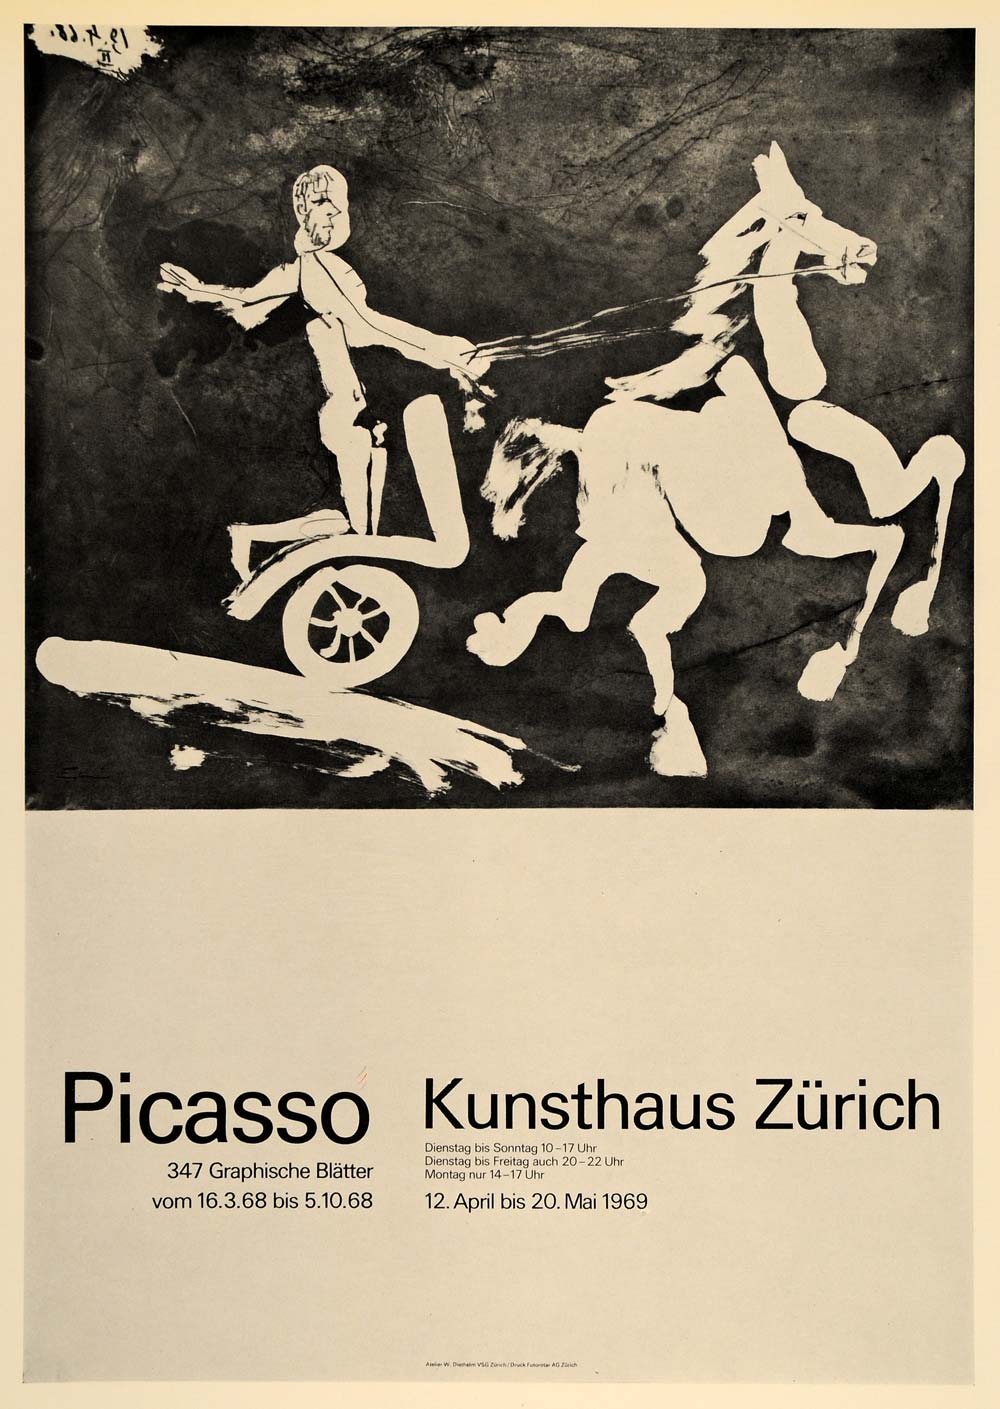 1971 Print Picasso Chariot Kunsthaus Zurich Poster 1969 - ORIGINAL PIC3